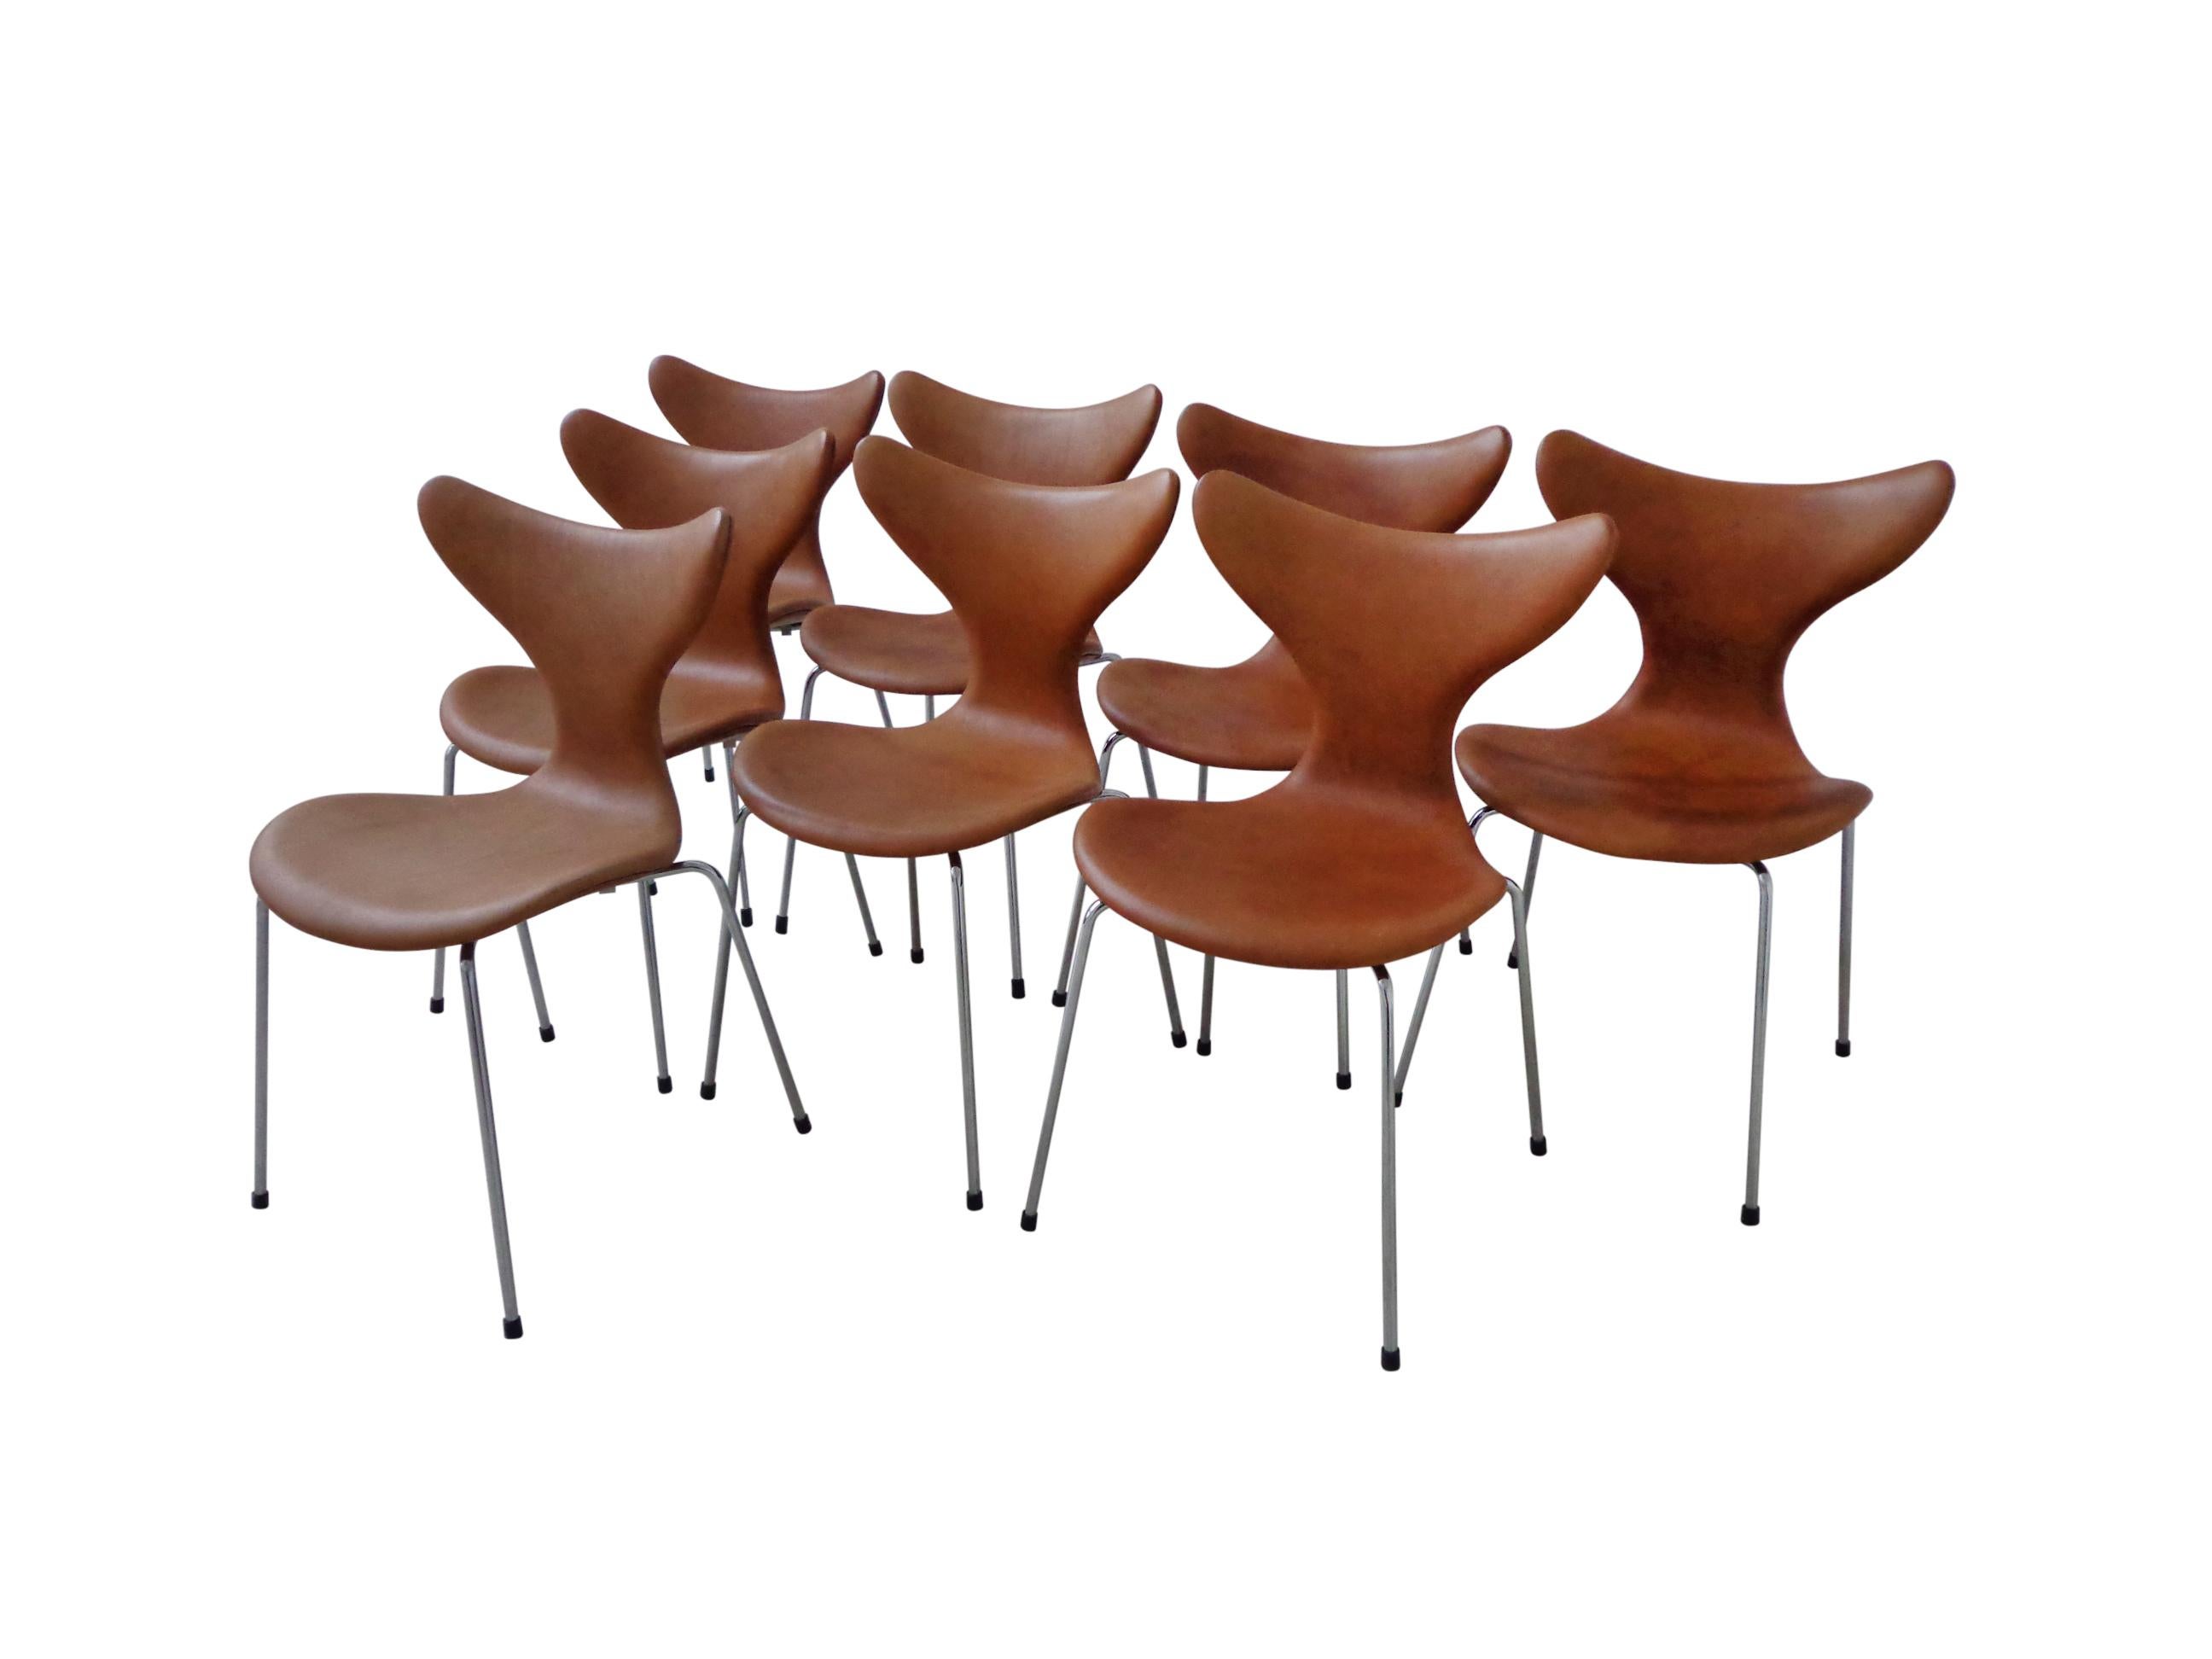 Scandinavian Modern Arne Jacobsen Dining Chairs Cognac Leather Model Lily 1970s Fritz Hansen Denmark